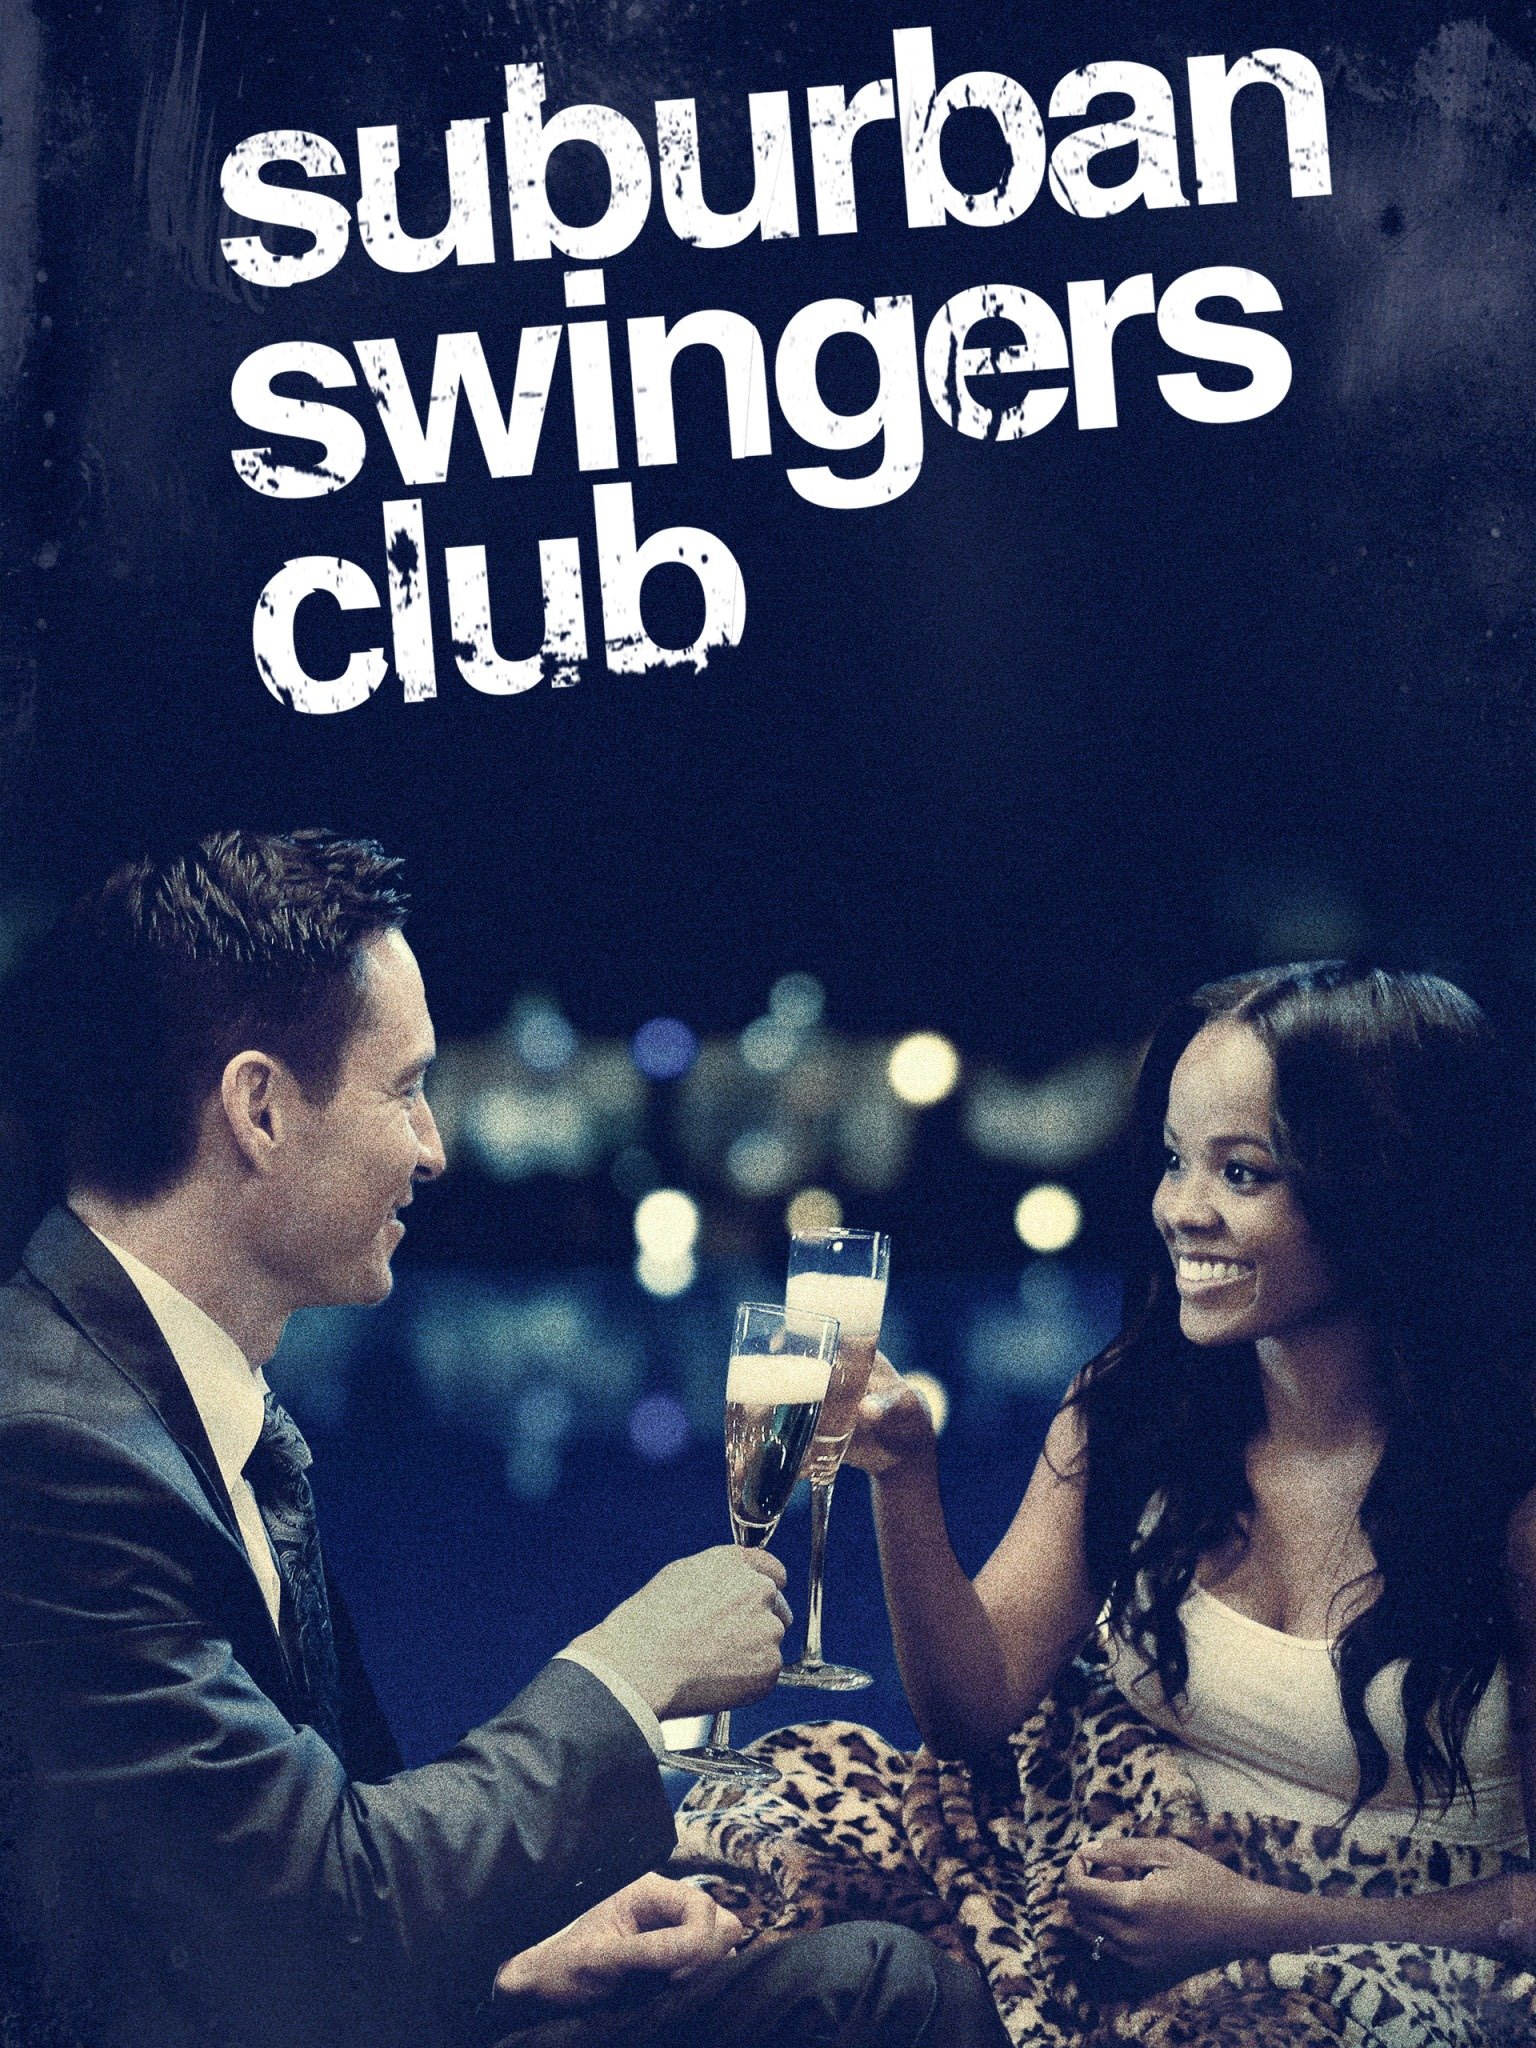 Suburban Swingers Club image